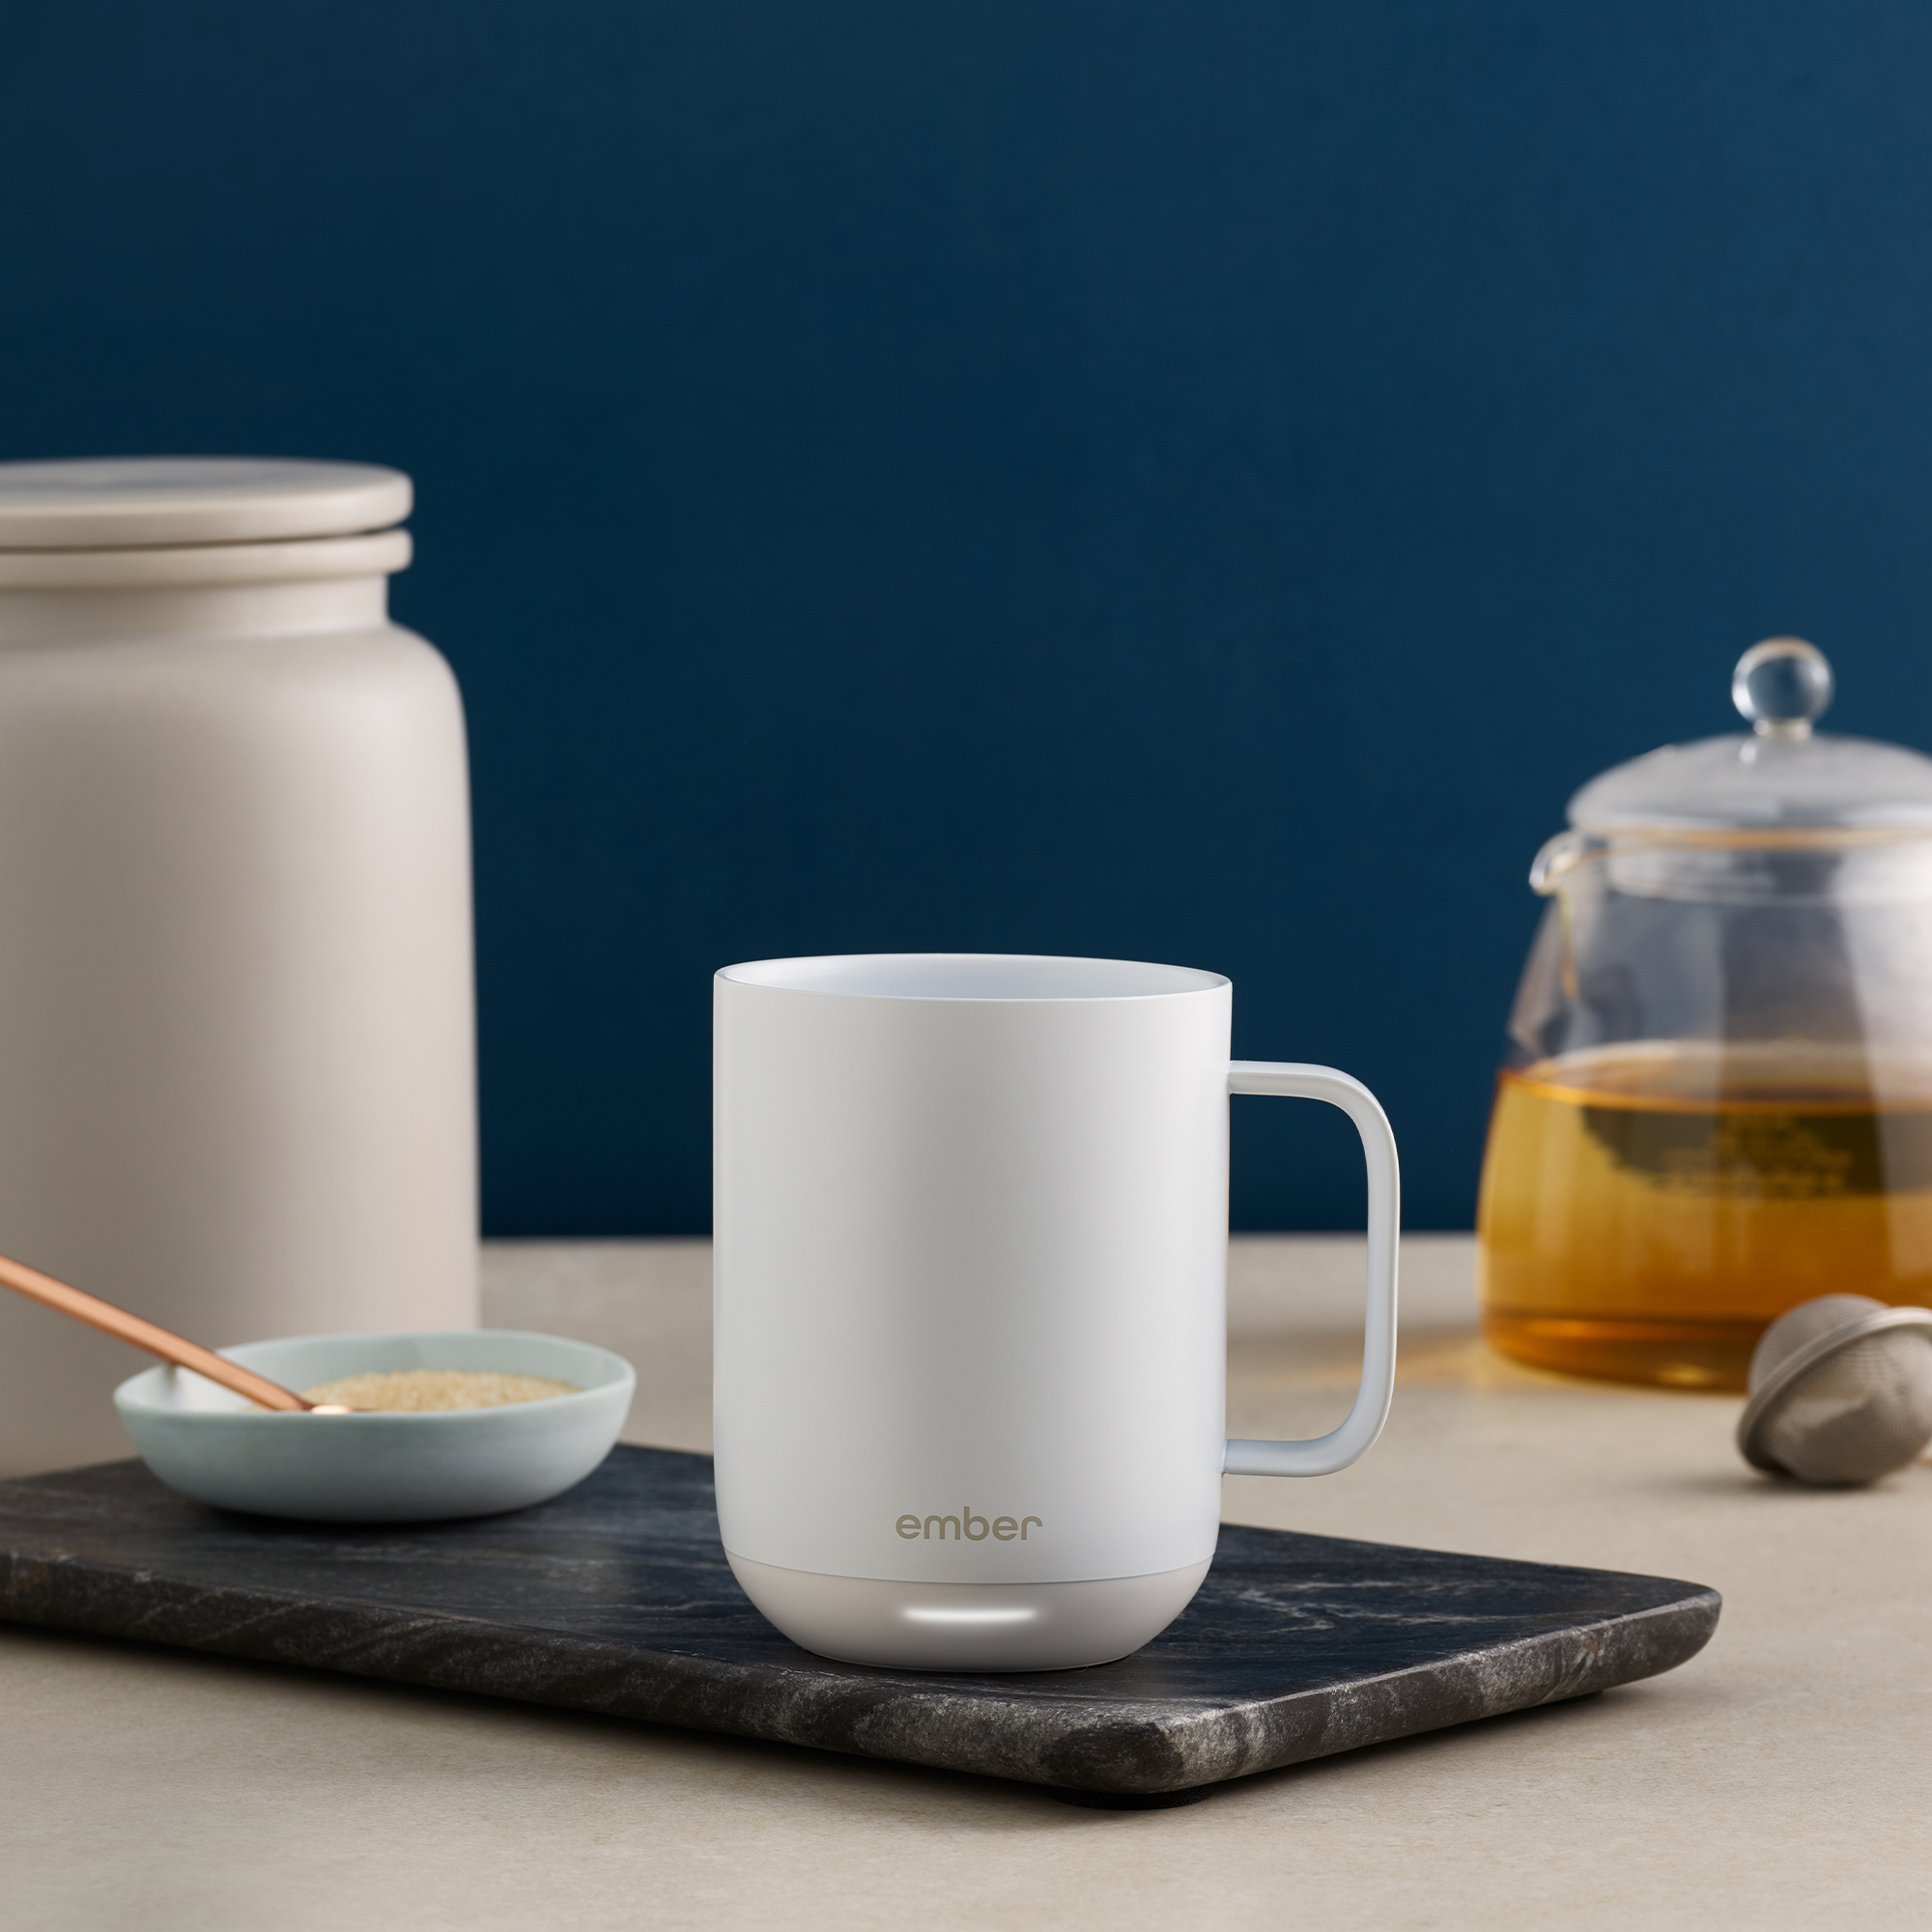 Ember Temperature Control Smart Mug 2, 10 oz, White, 1.5-hr Battery Life - App Controlled Heated Coffee Mug - Improved Design - image 7 of 9